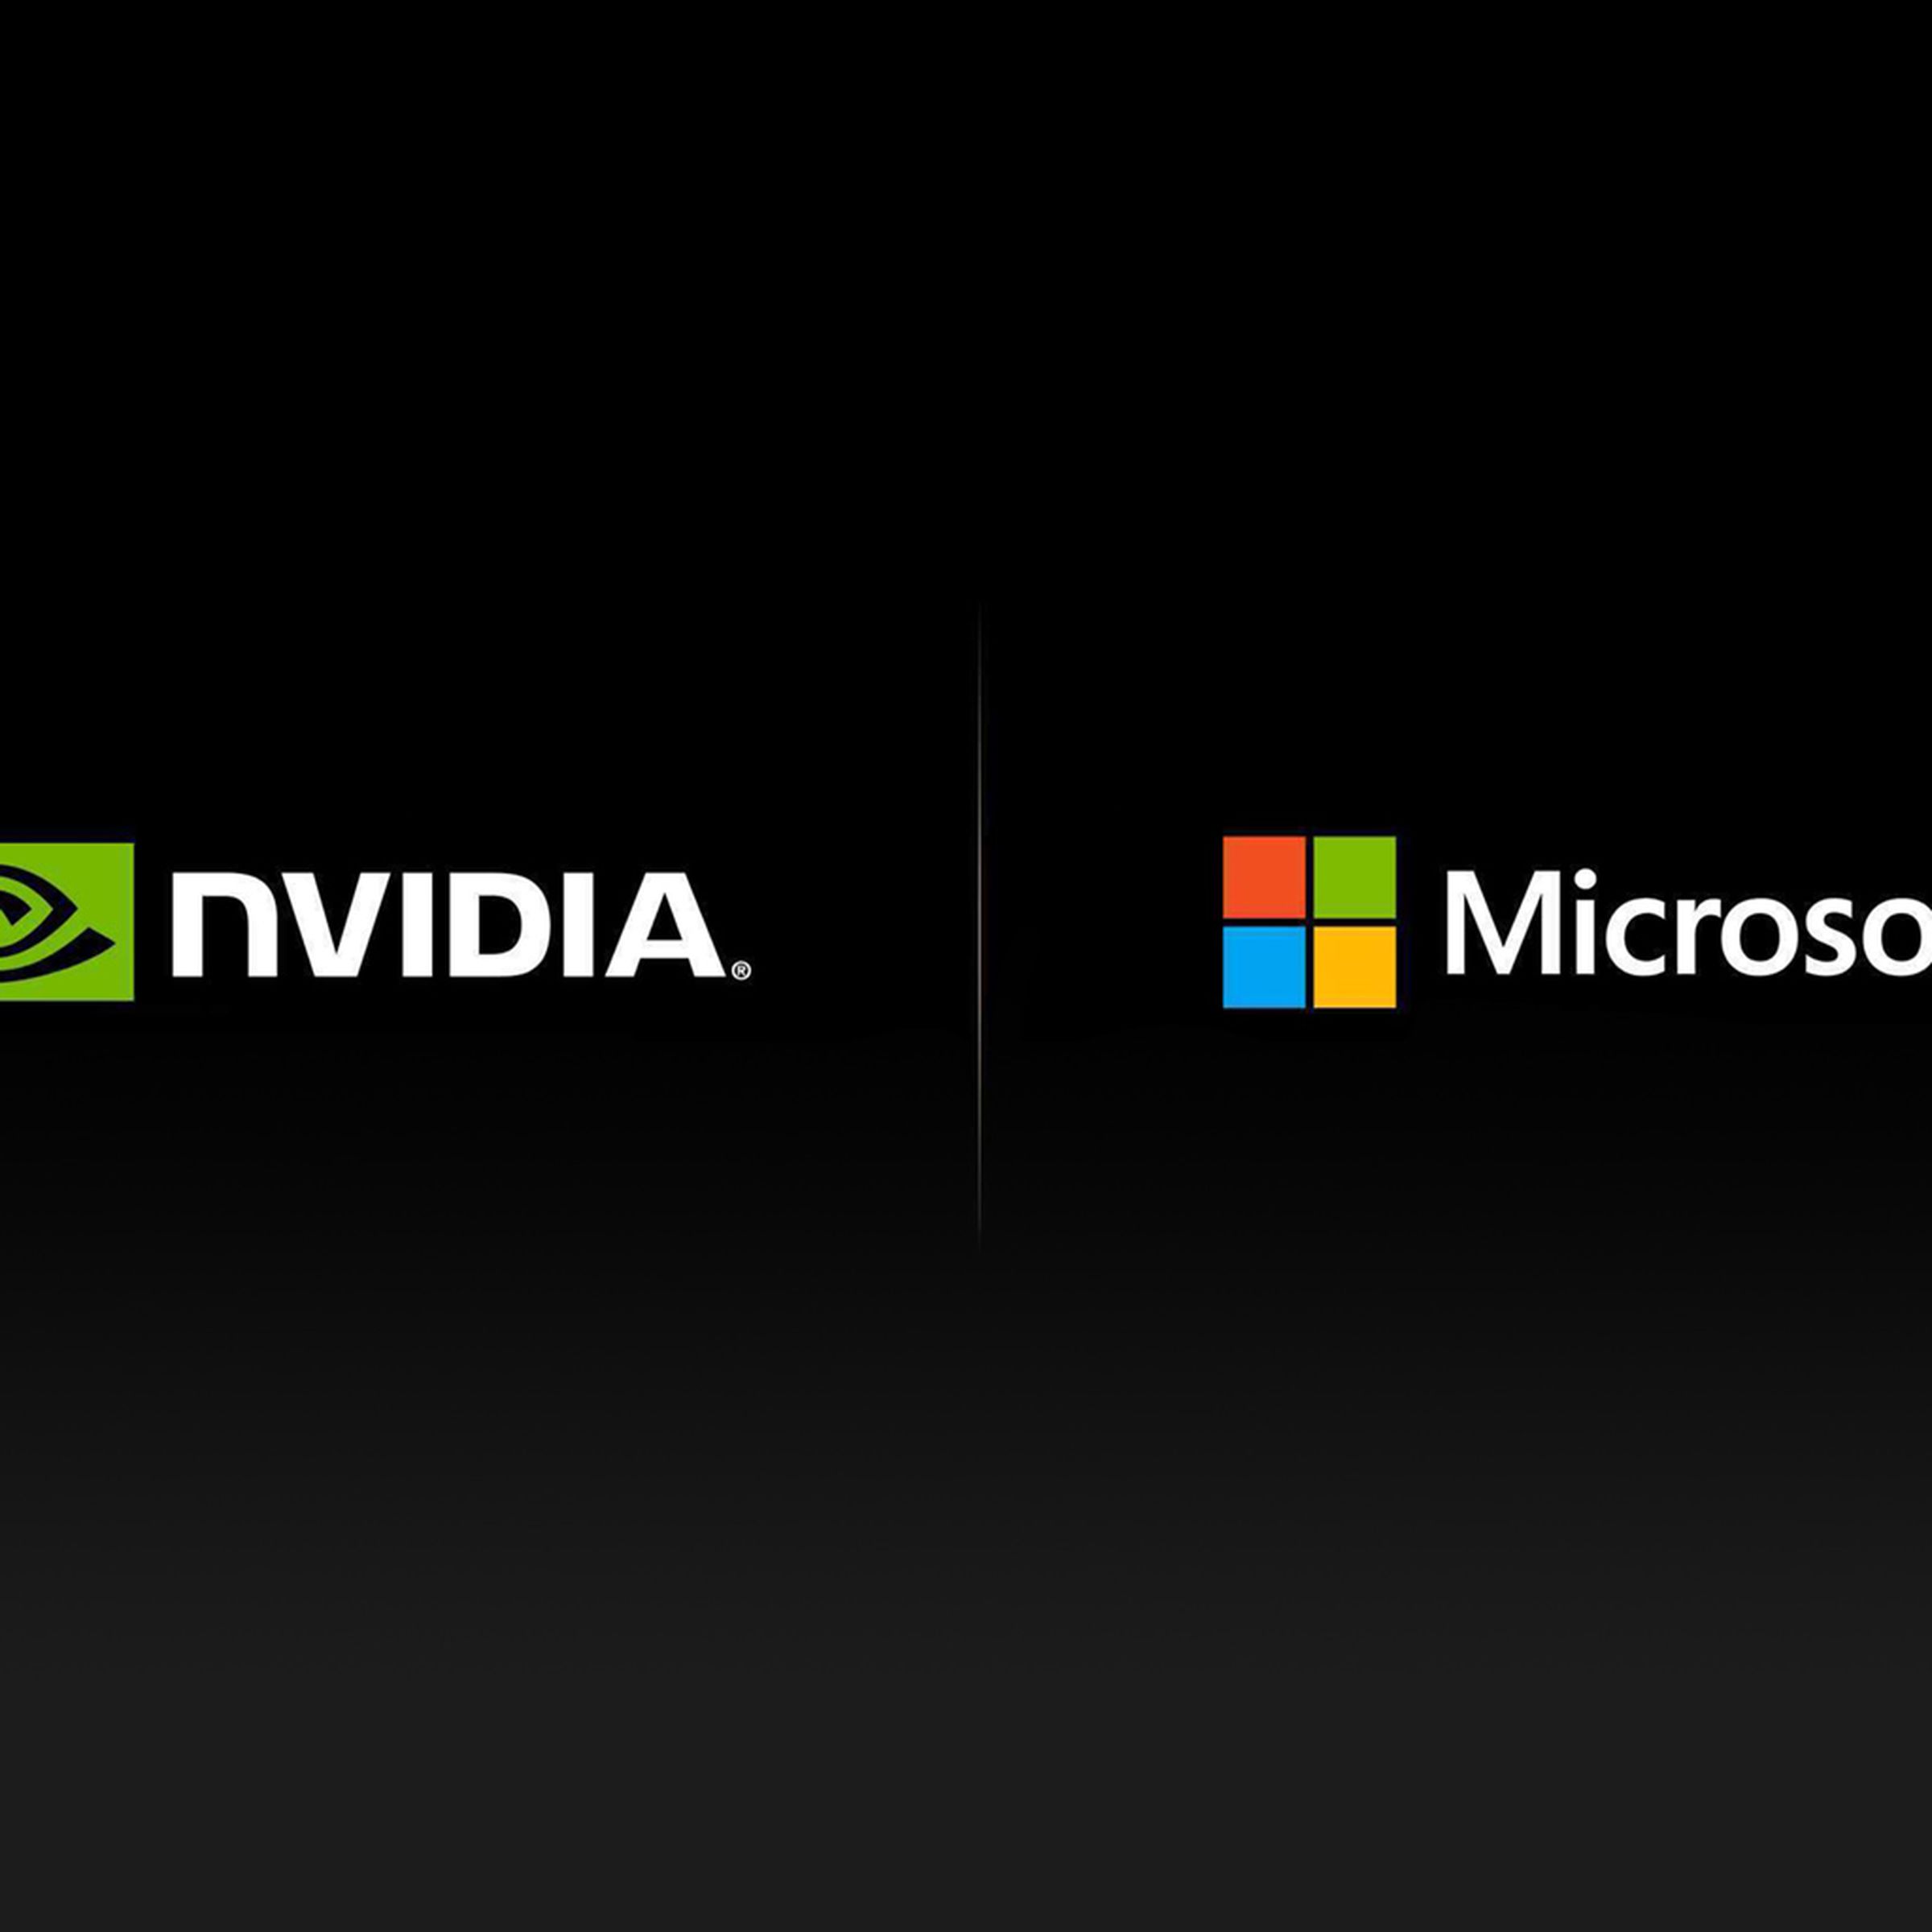 Illustration of Nvidia and Microsoft logos